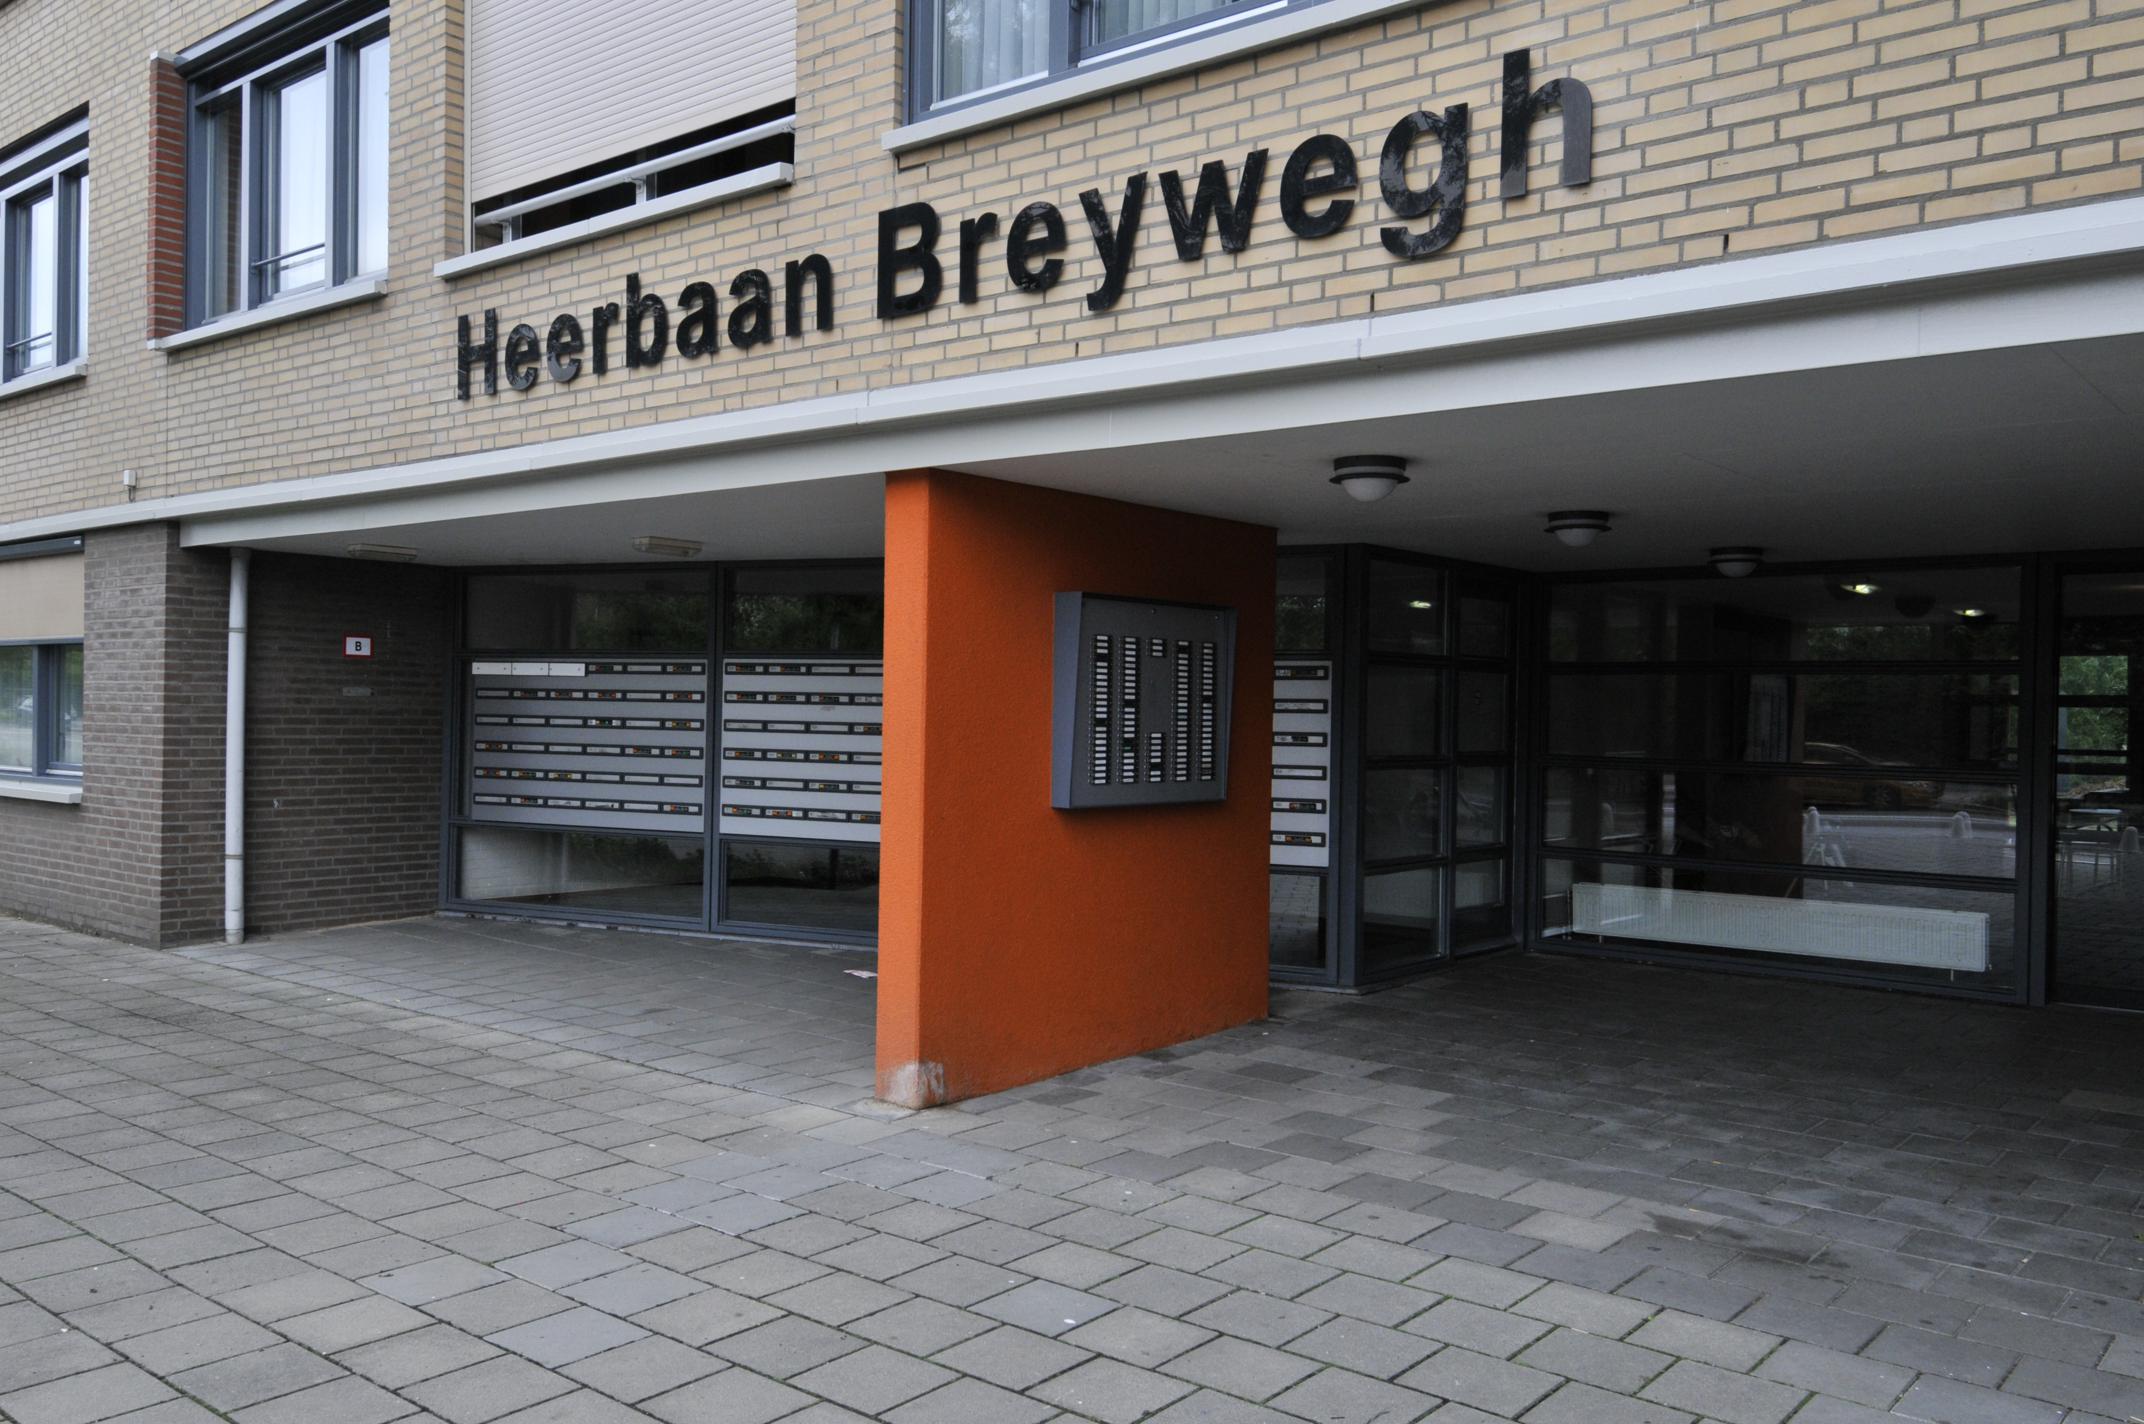 Heerbaan Breywegh 97